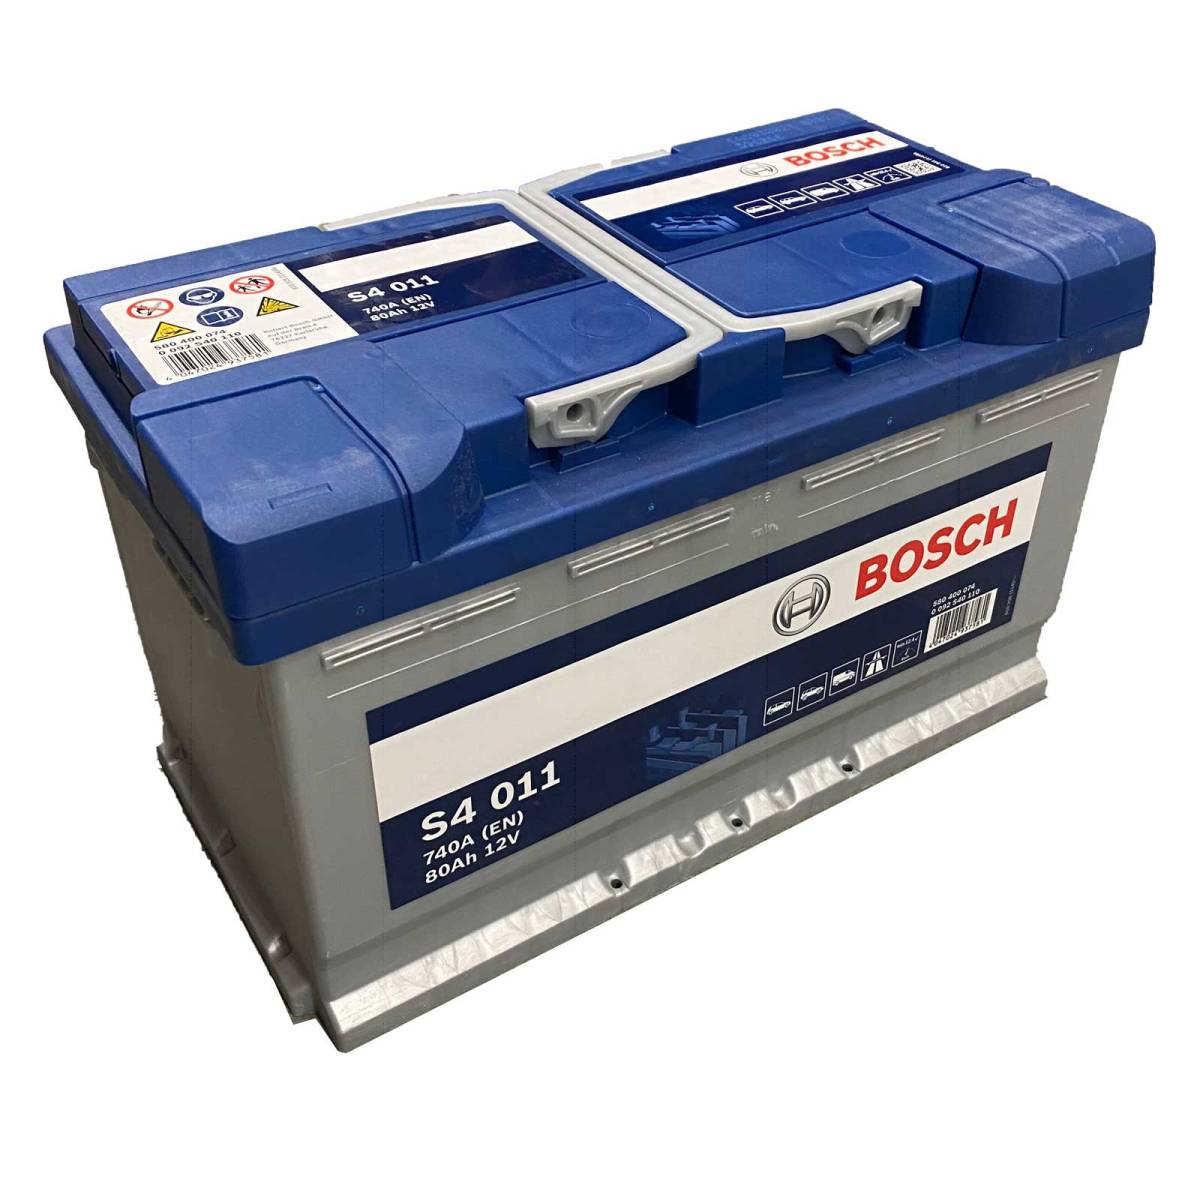 Bosch S4 011 Autobatterie 12V 80Ah 740A, Starterbatterie, Boot, Batterien für